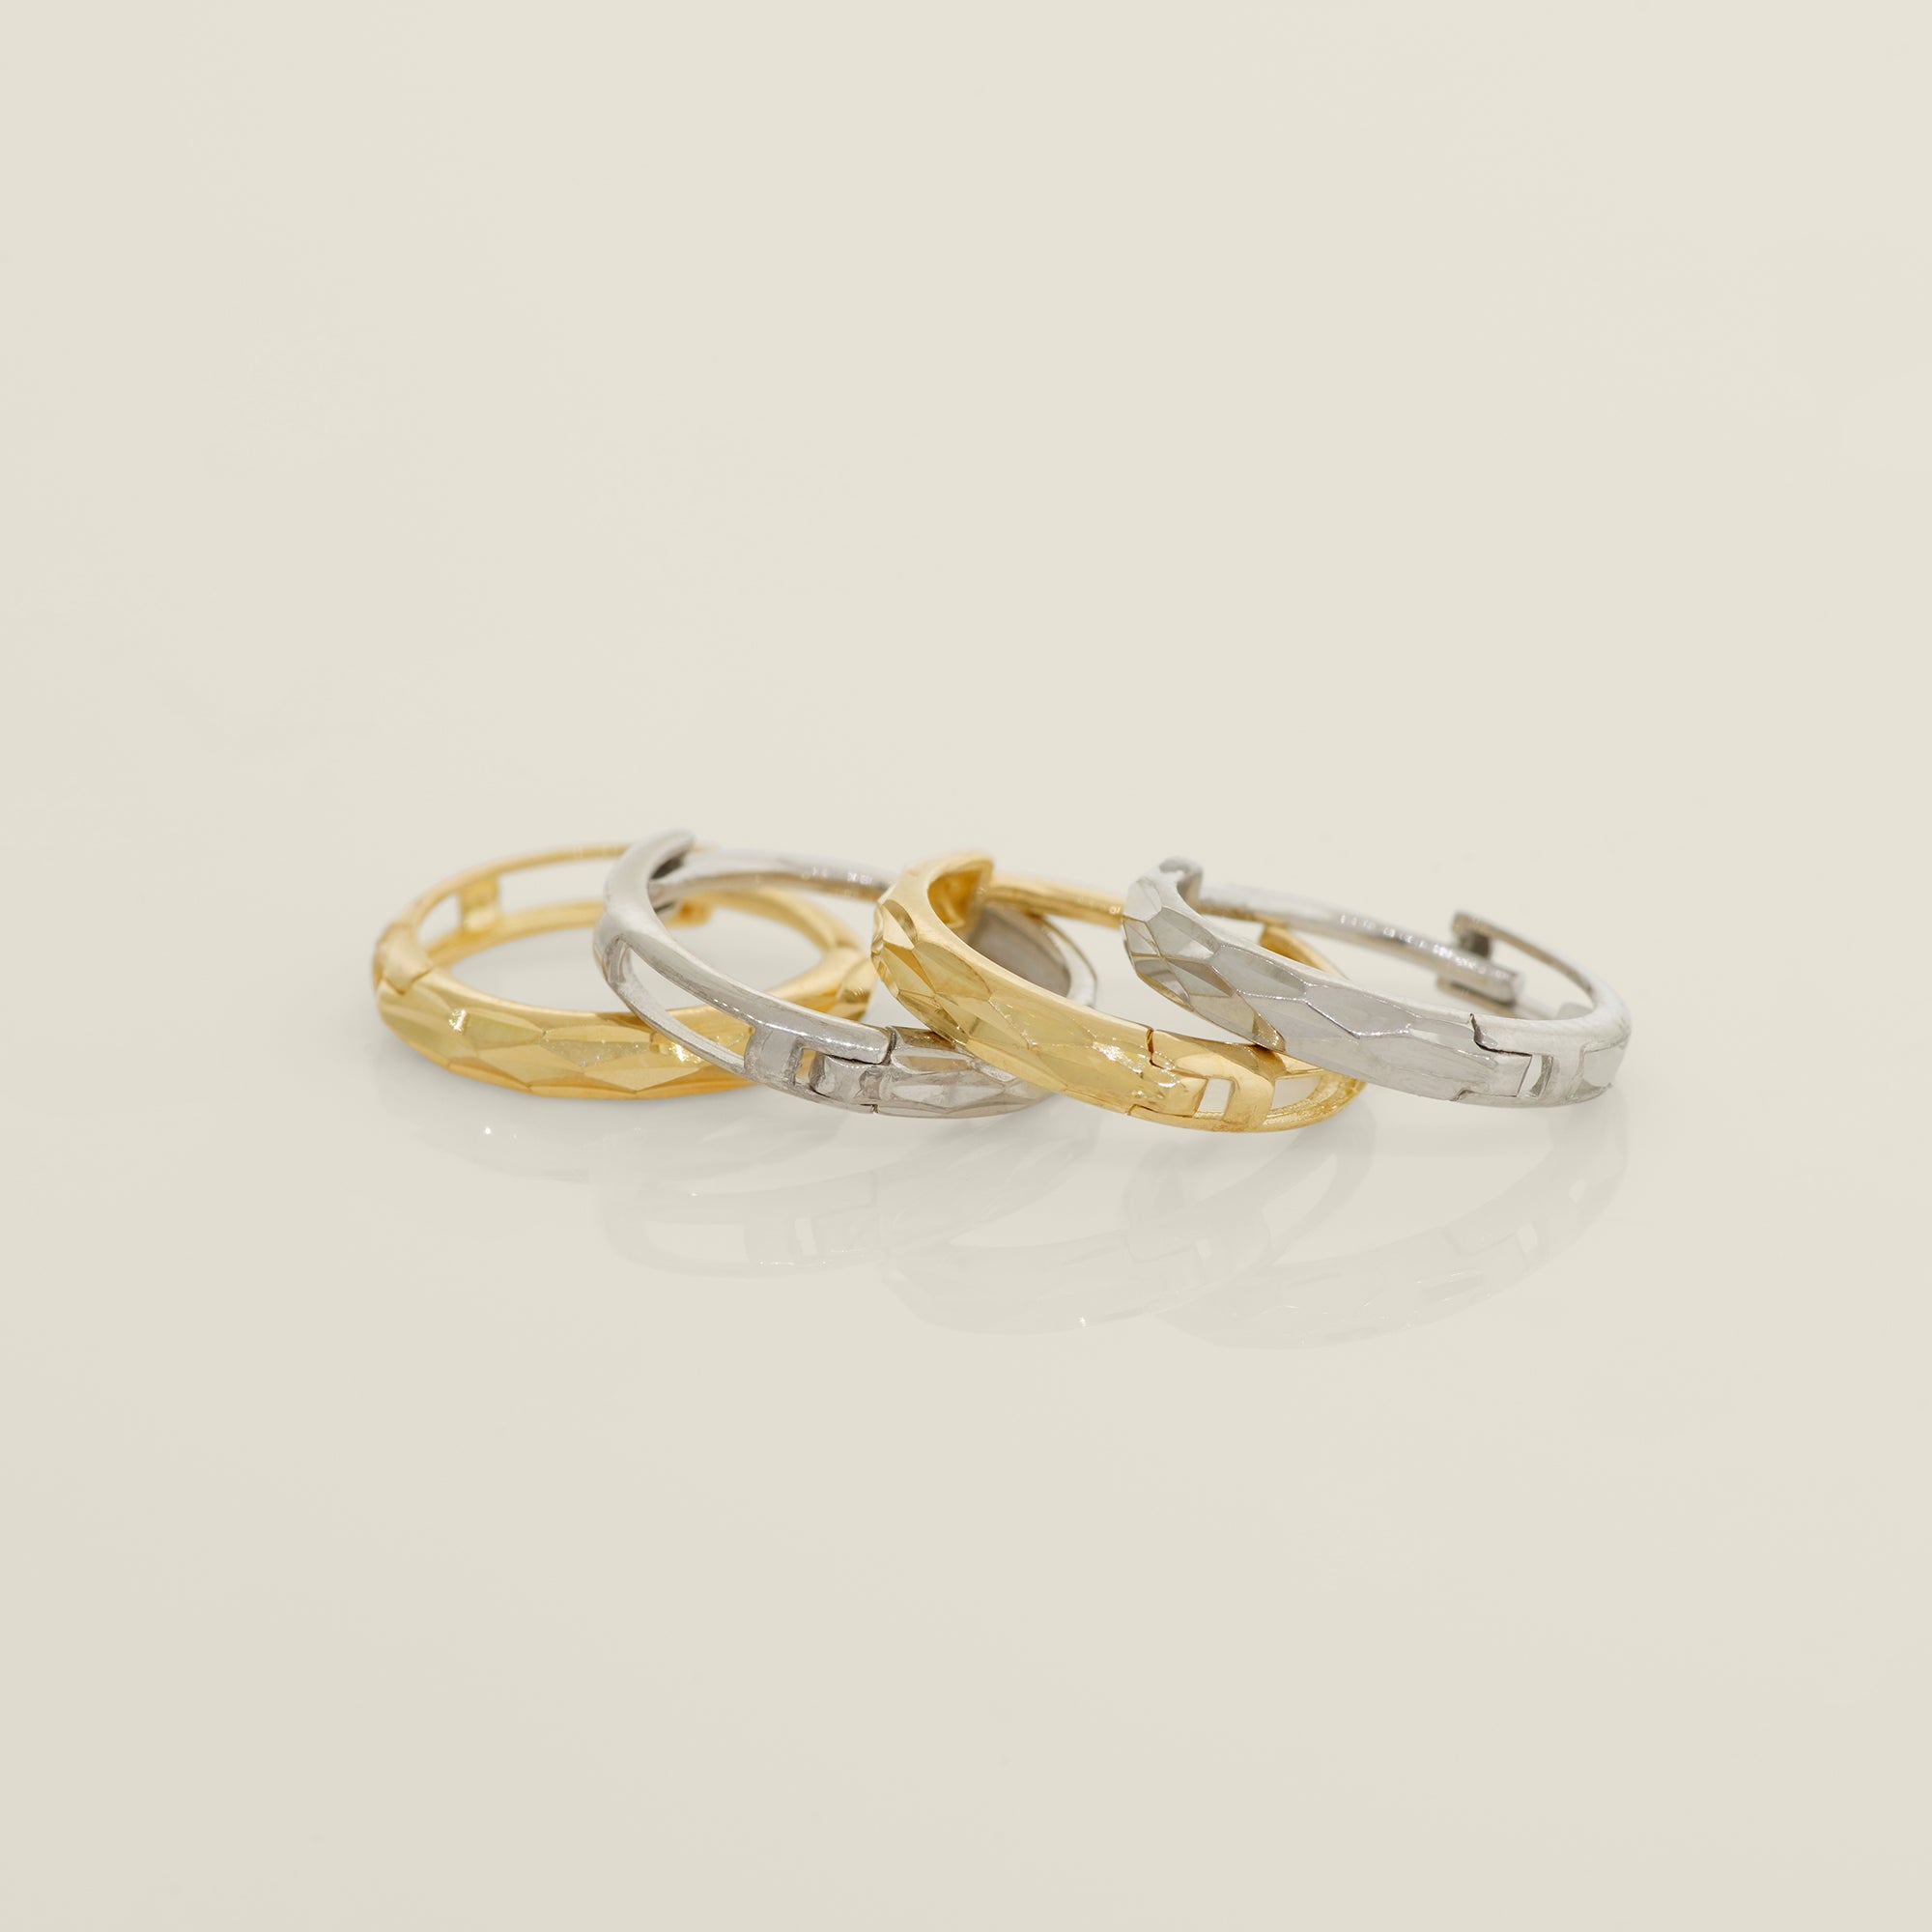 14K Solid Gold Mini Diamond-Cut Hoop Huggie Earrings - Anygolds 